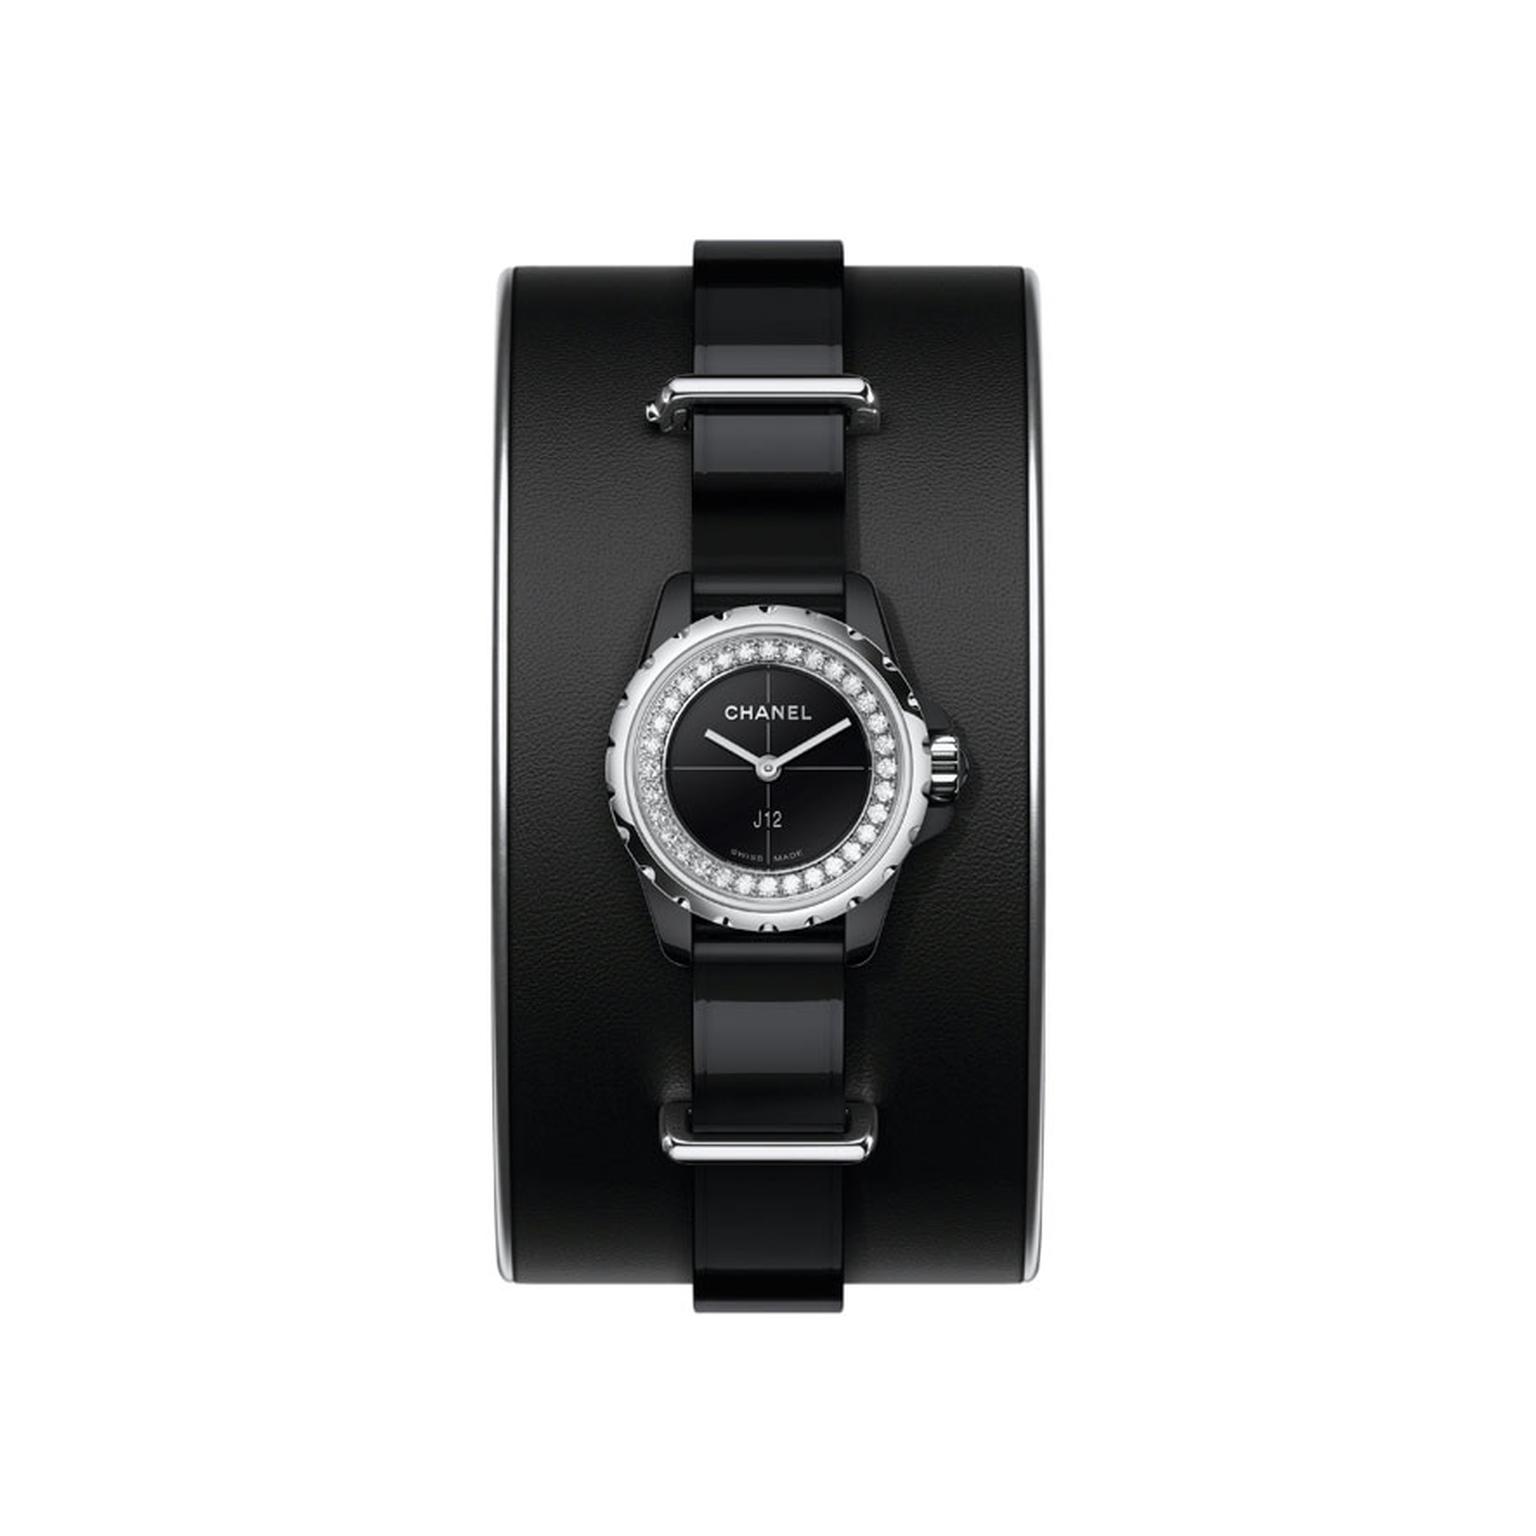 Chanel J12 XS small cuff black ceramic watch